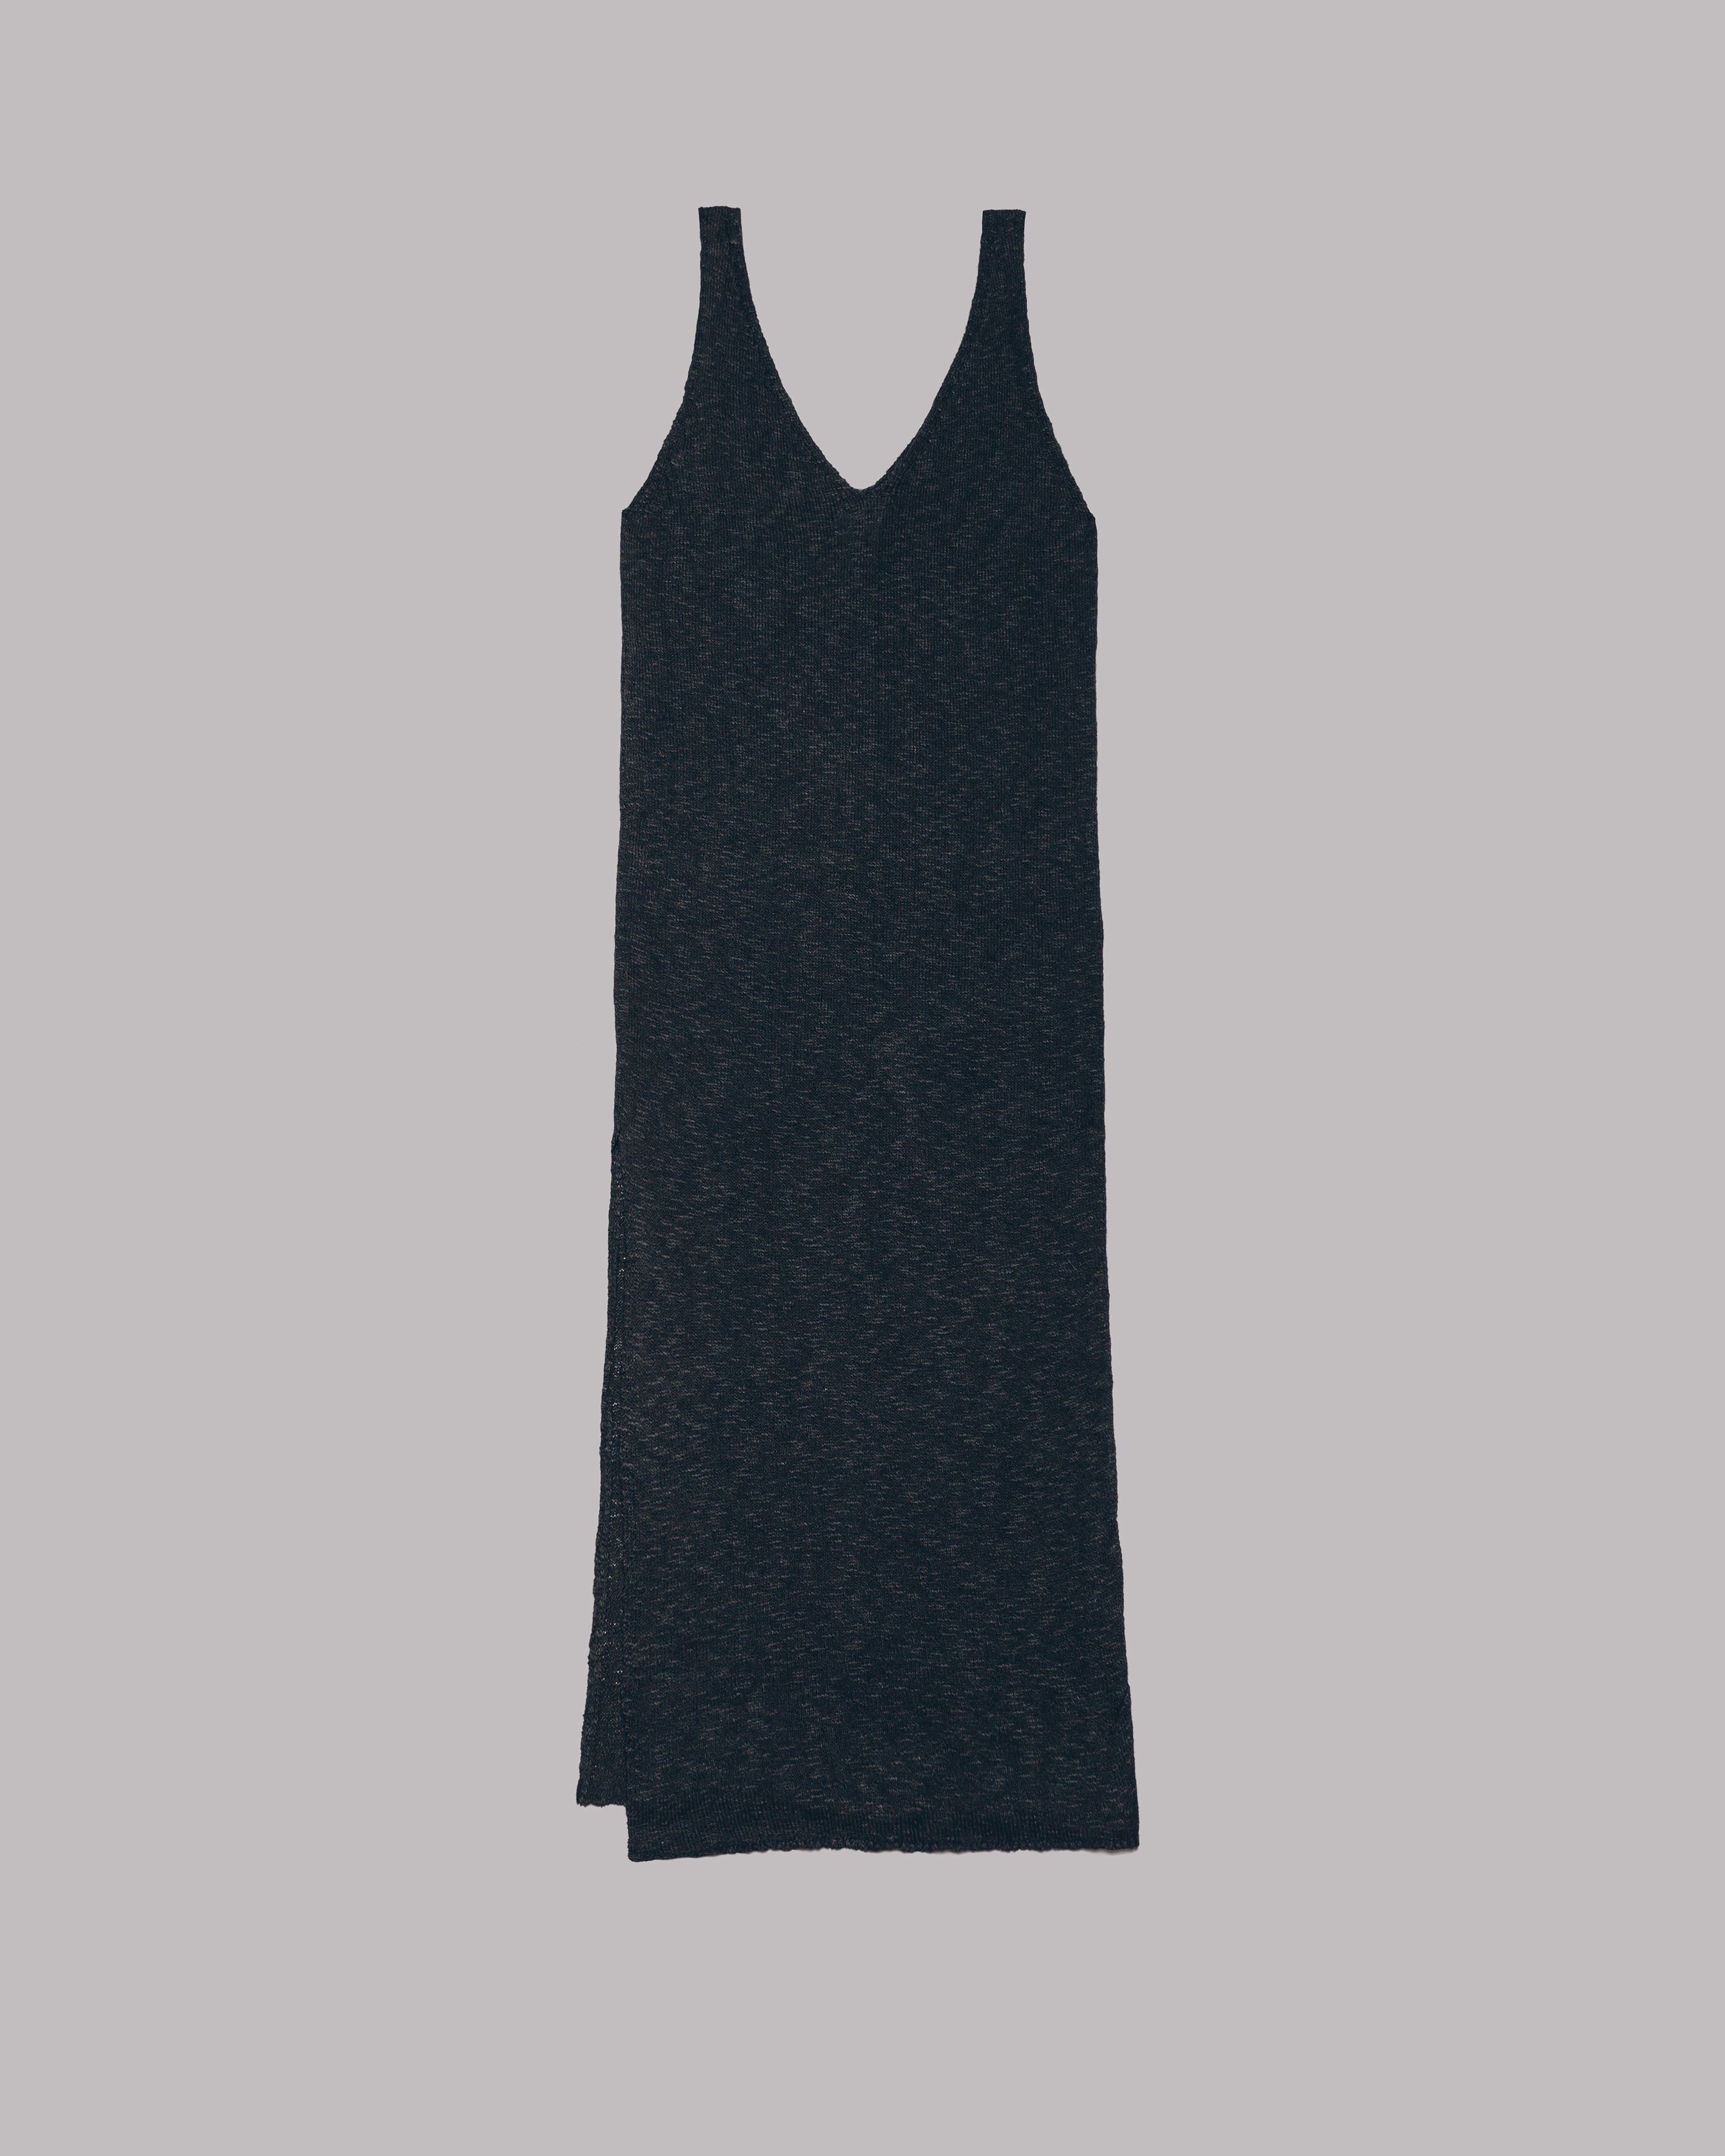 The Black Thin Knit Dress